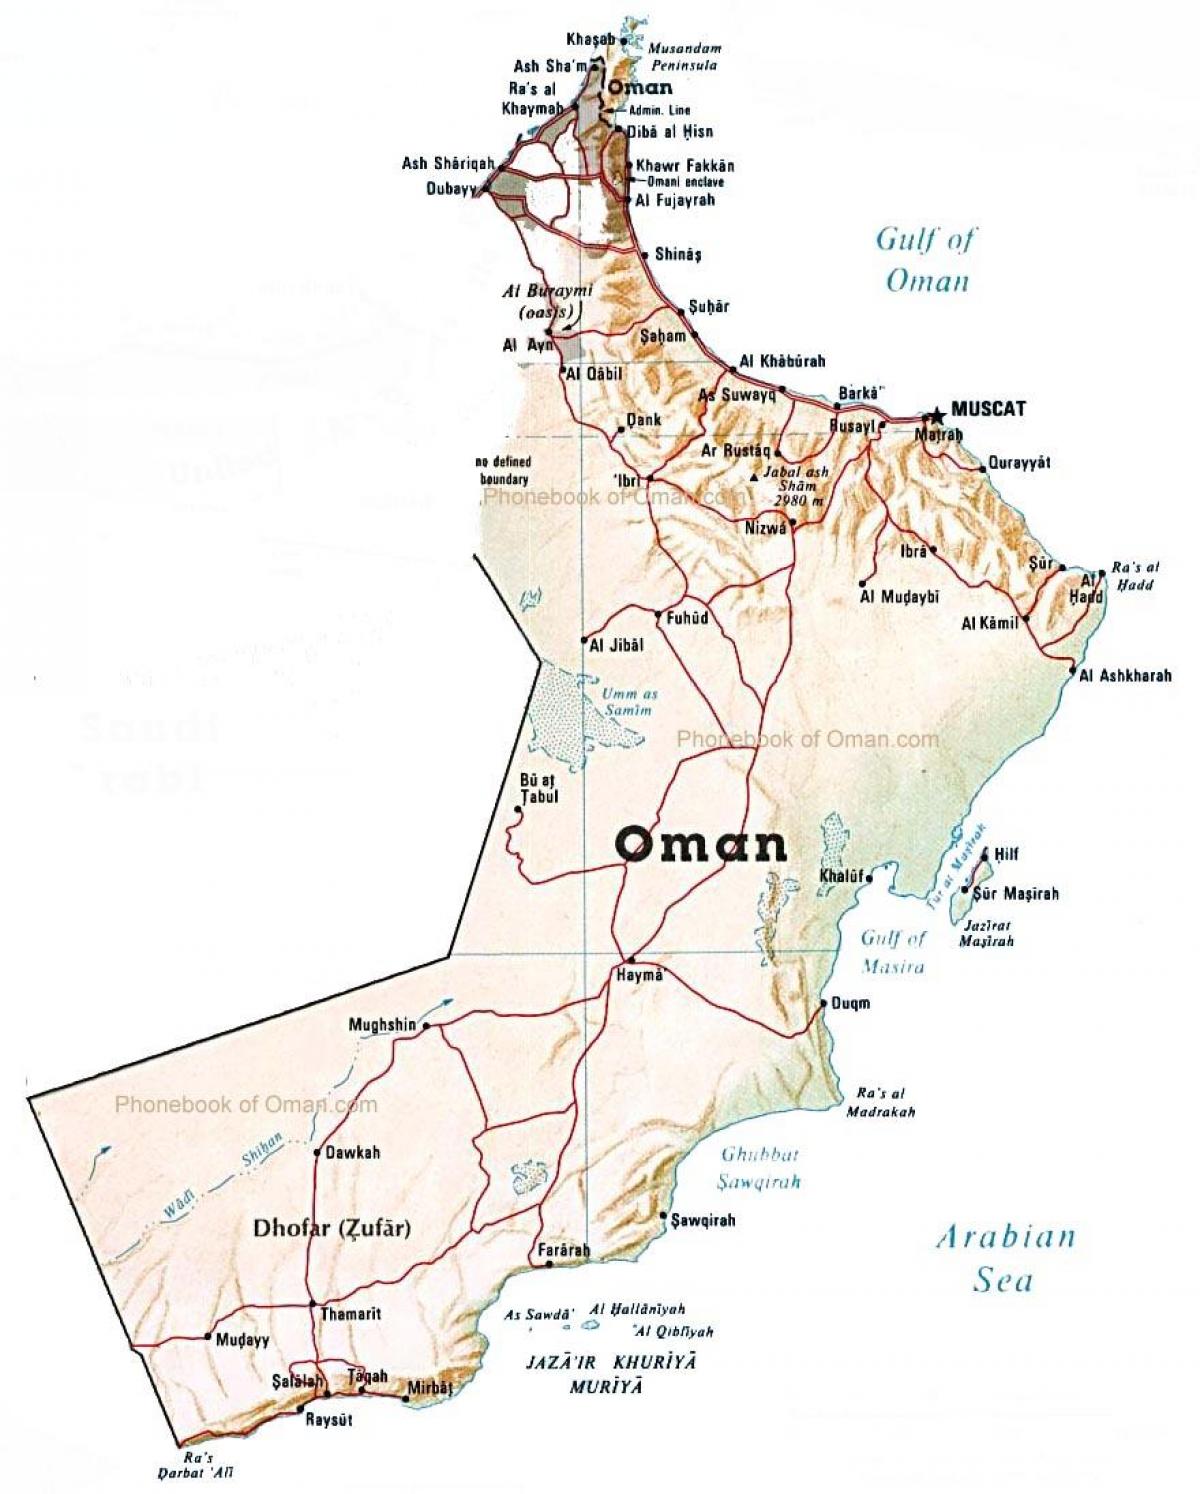 Oman herriko mapa